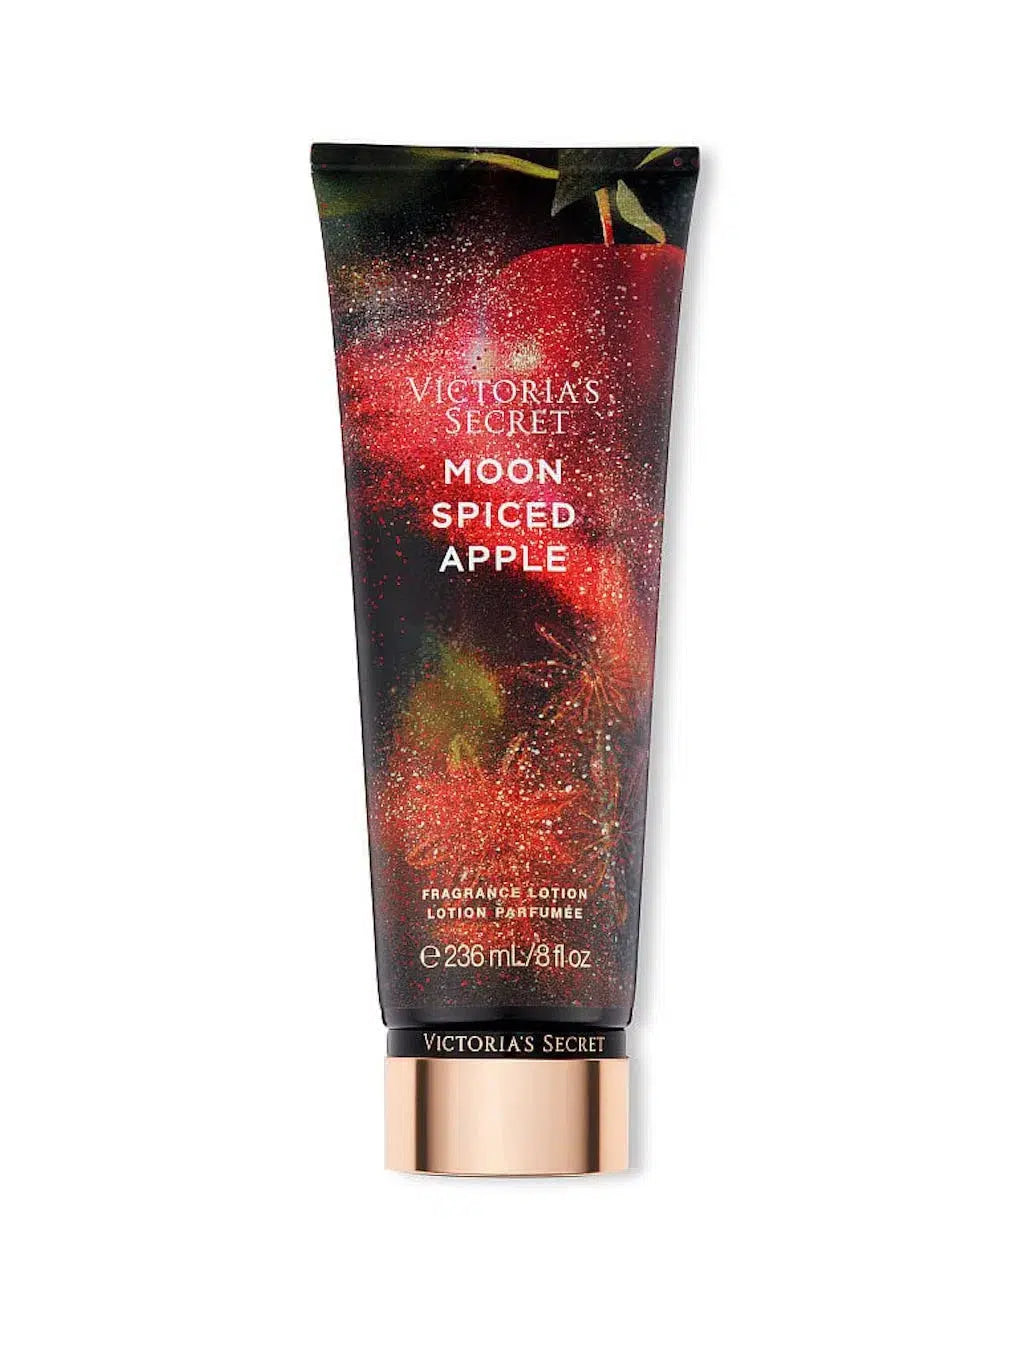 Victoria Secret Moon Spiced Apple Fragrance Body Lotion 236ml